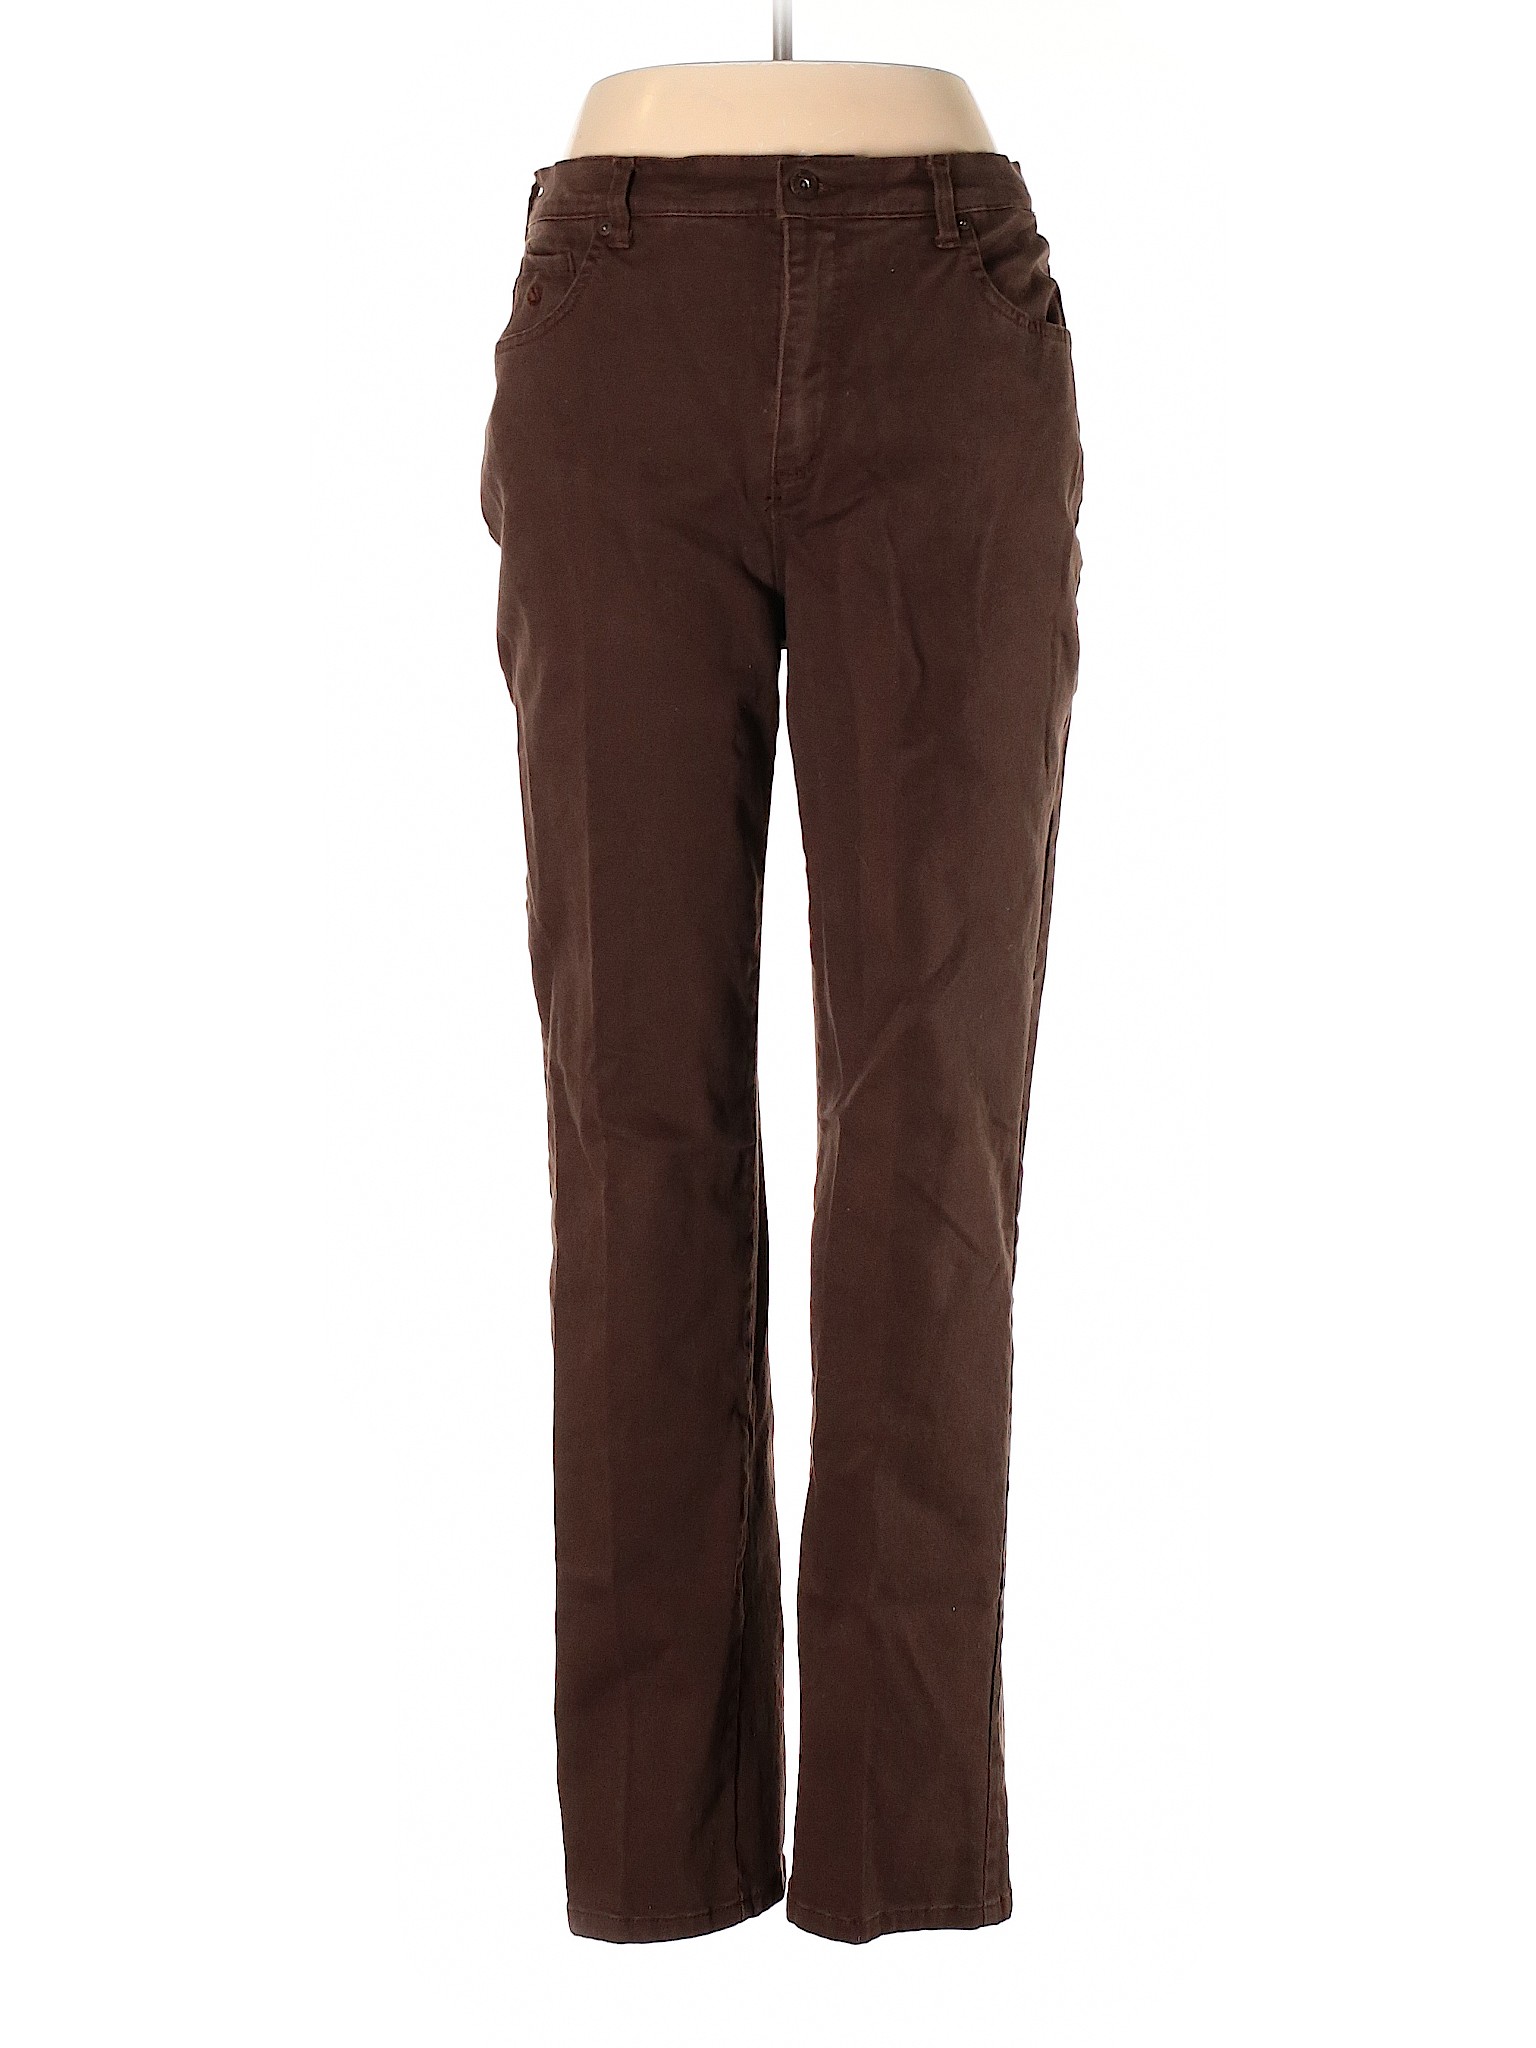 Gloria Vanderbilt Women Brown Jeans 12 | eBay